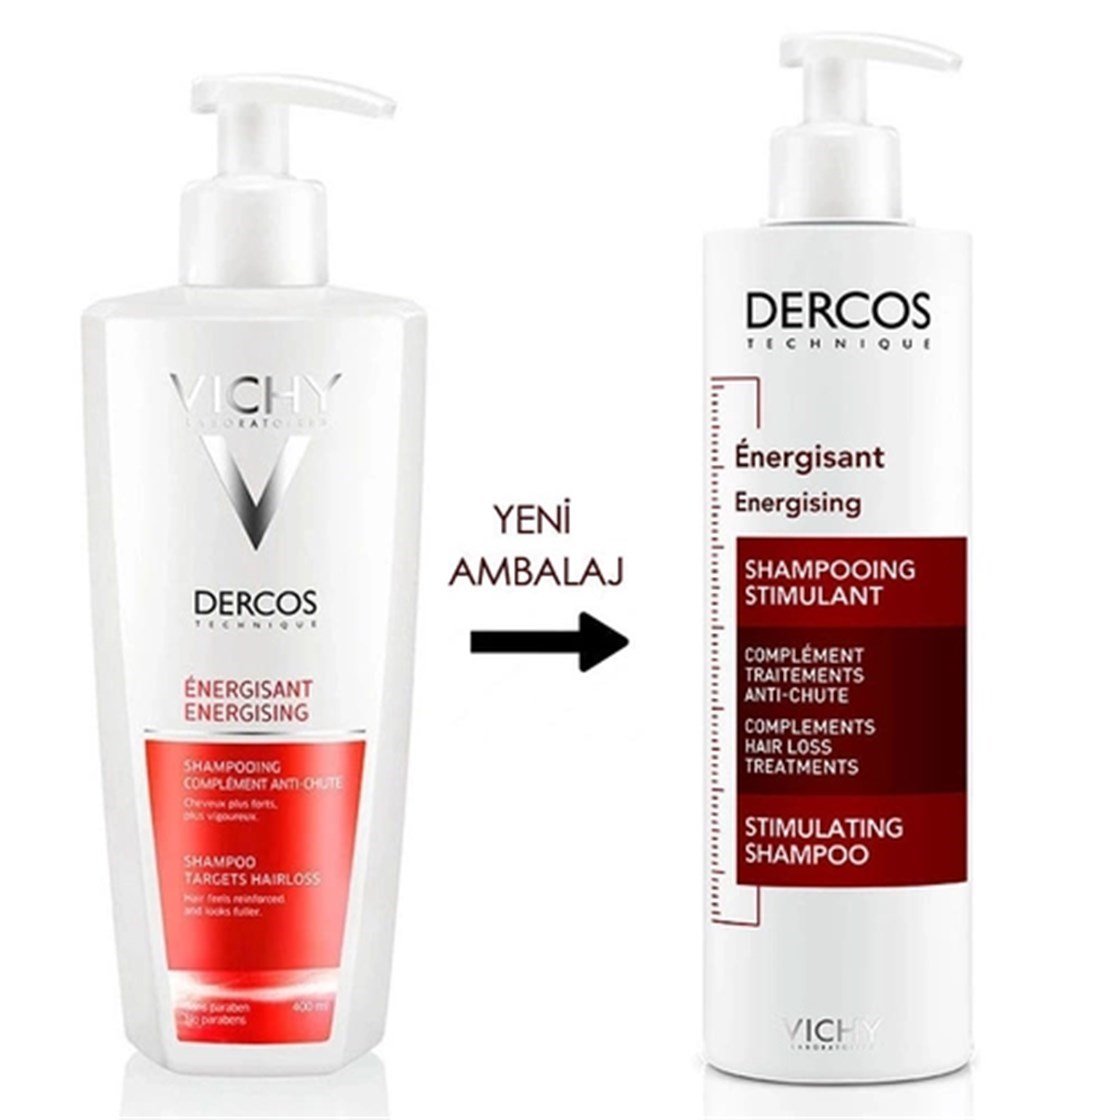 Vichy Dercos Shampooing Energisant 400 ml Saç Dökülmesine Karşı Tamamlayıcı  Şampuan | Dermoailem